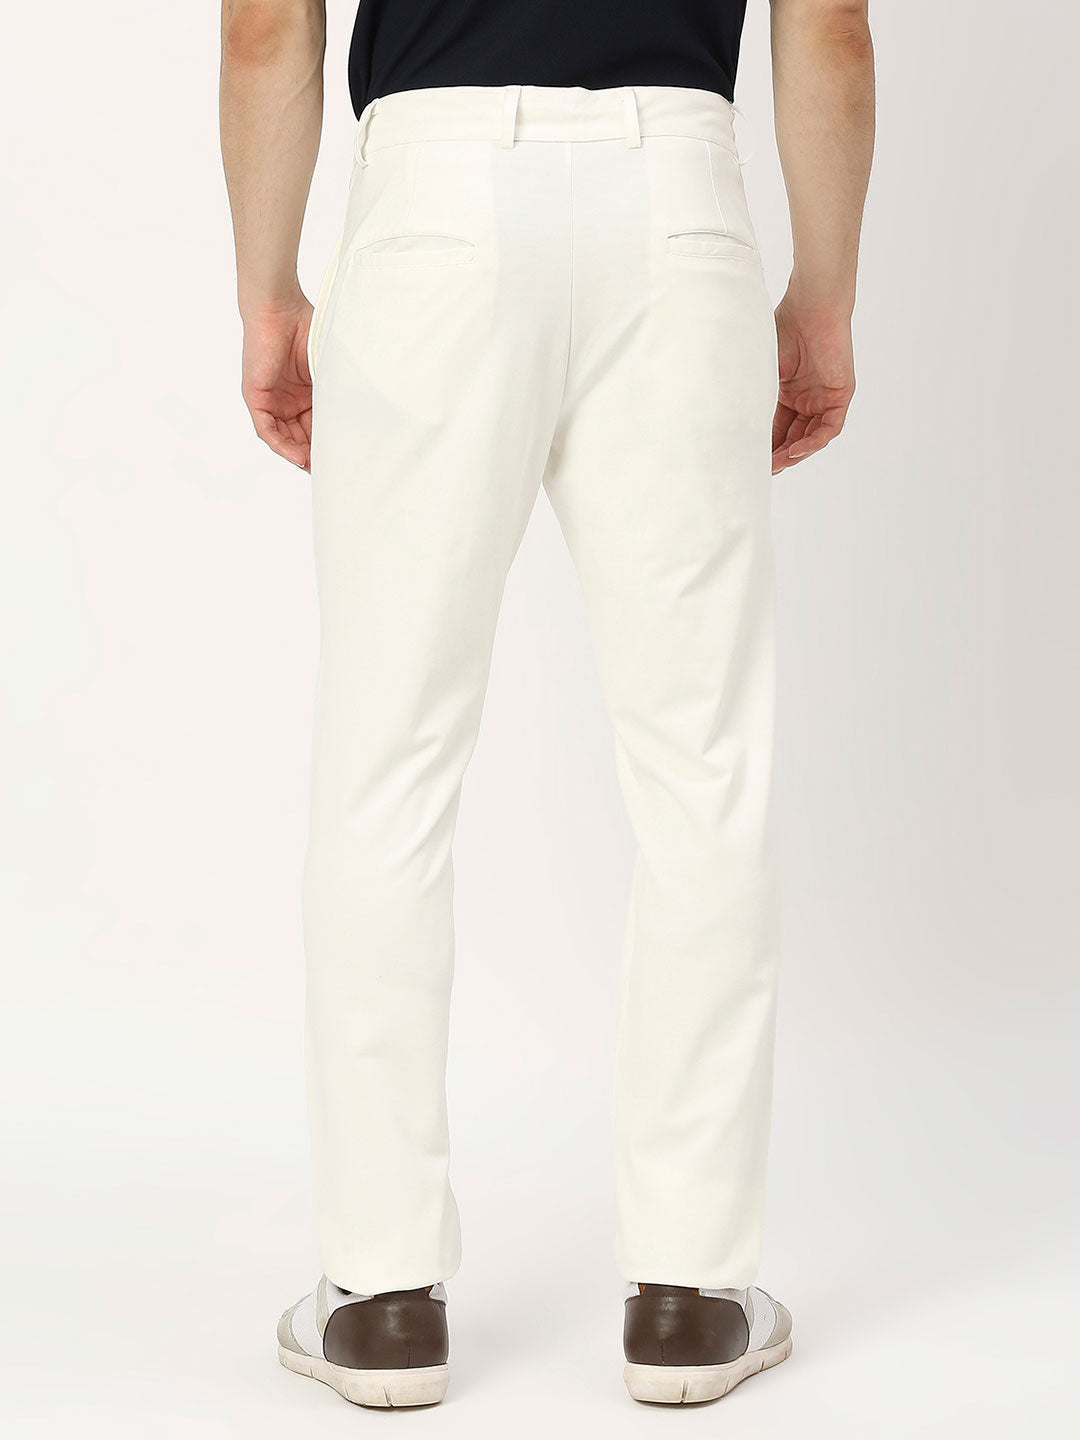 Men's Golf Pants - White - 1